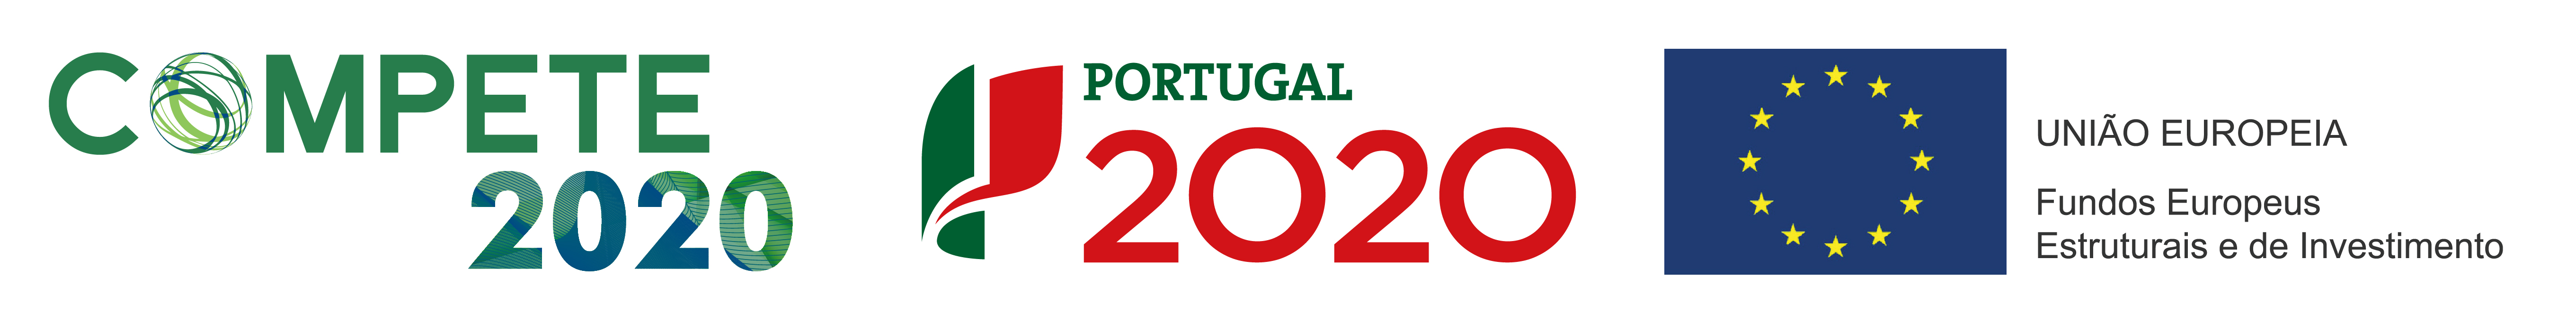 Logo Compete 2020